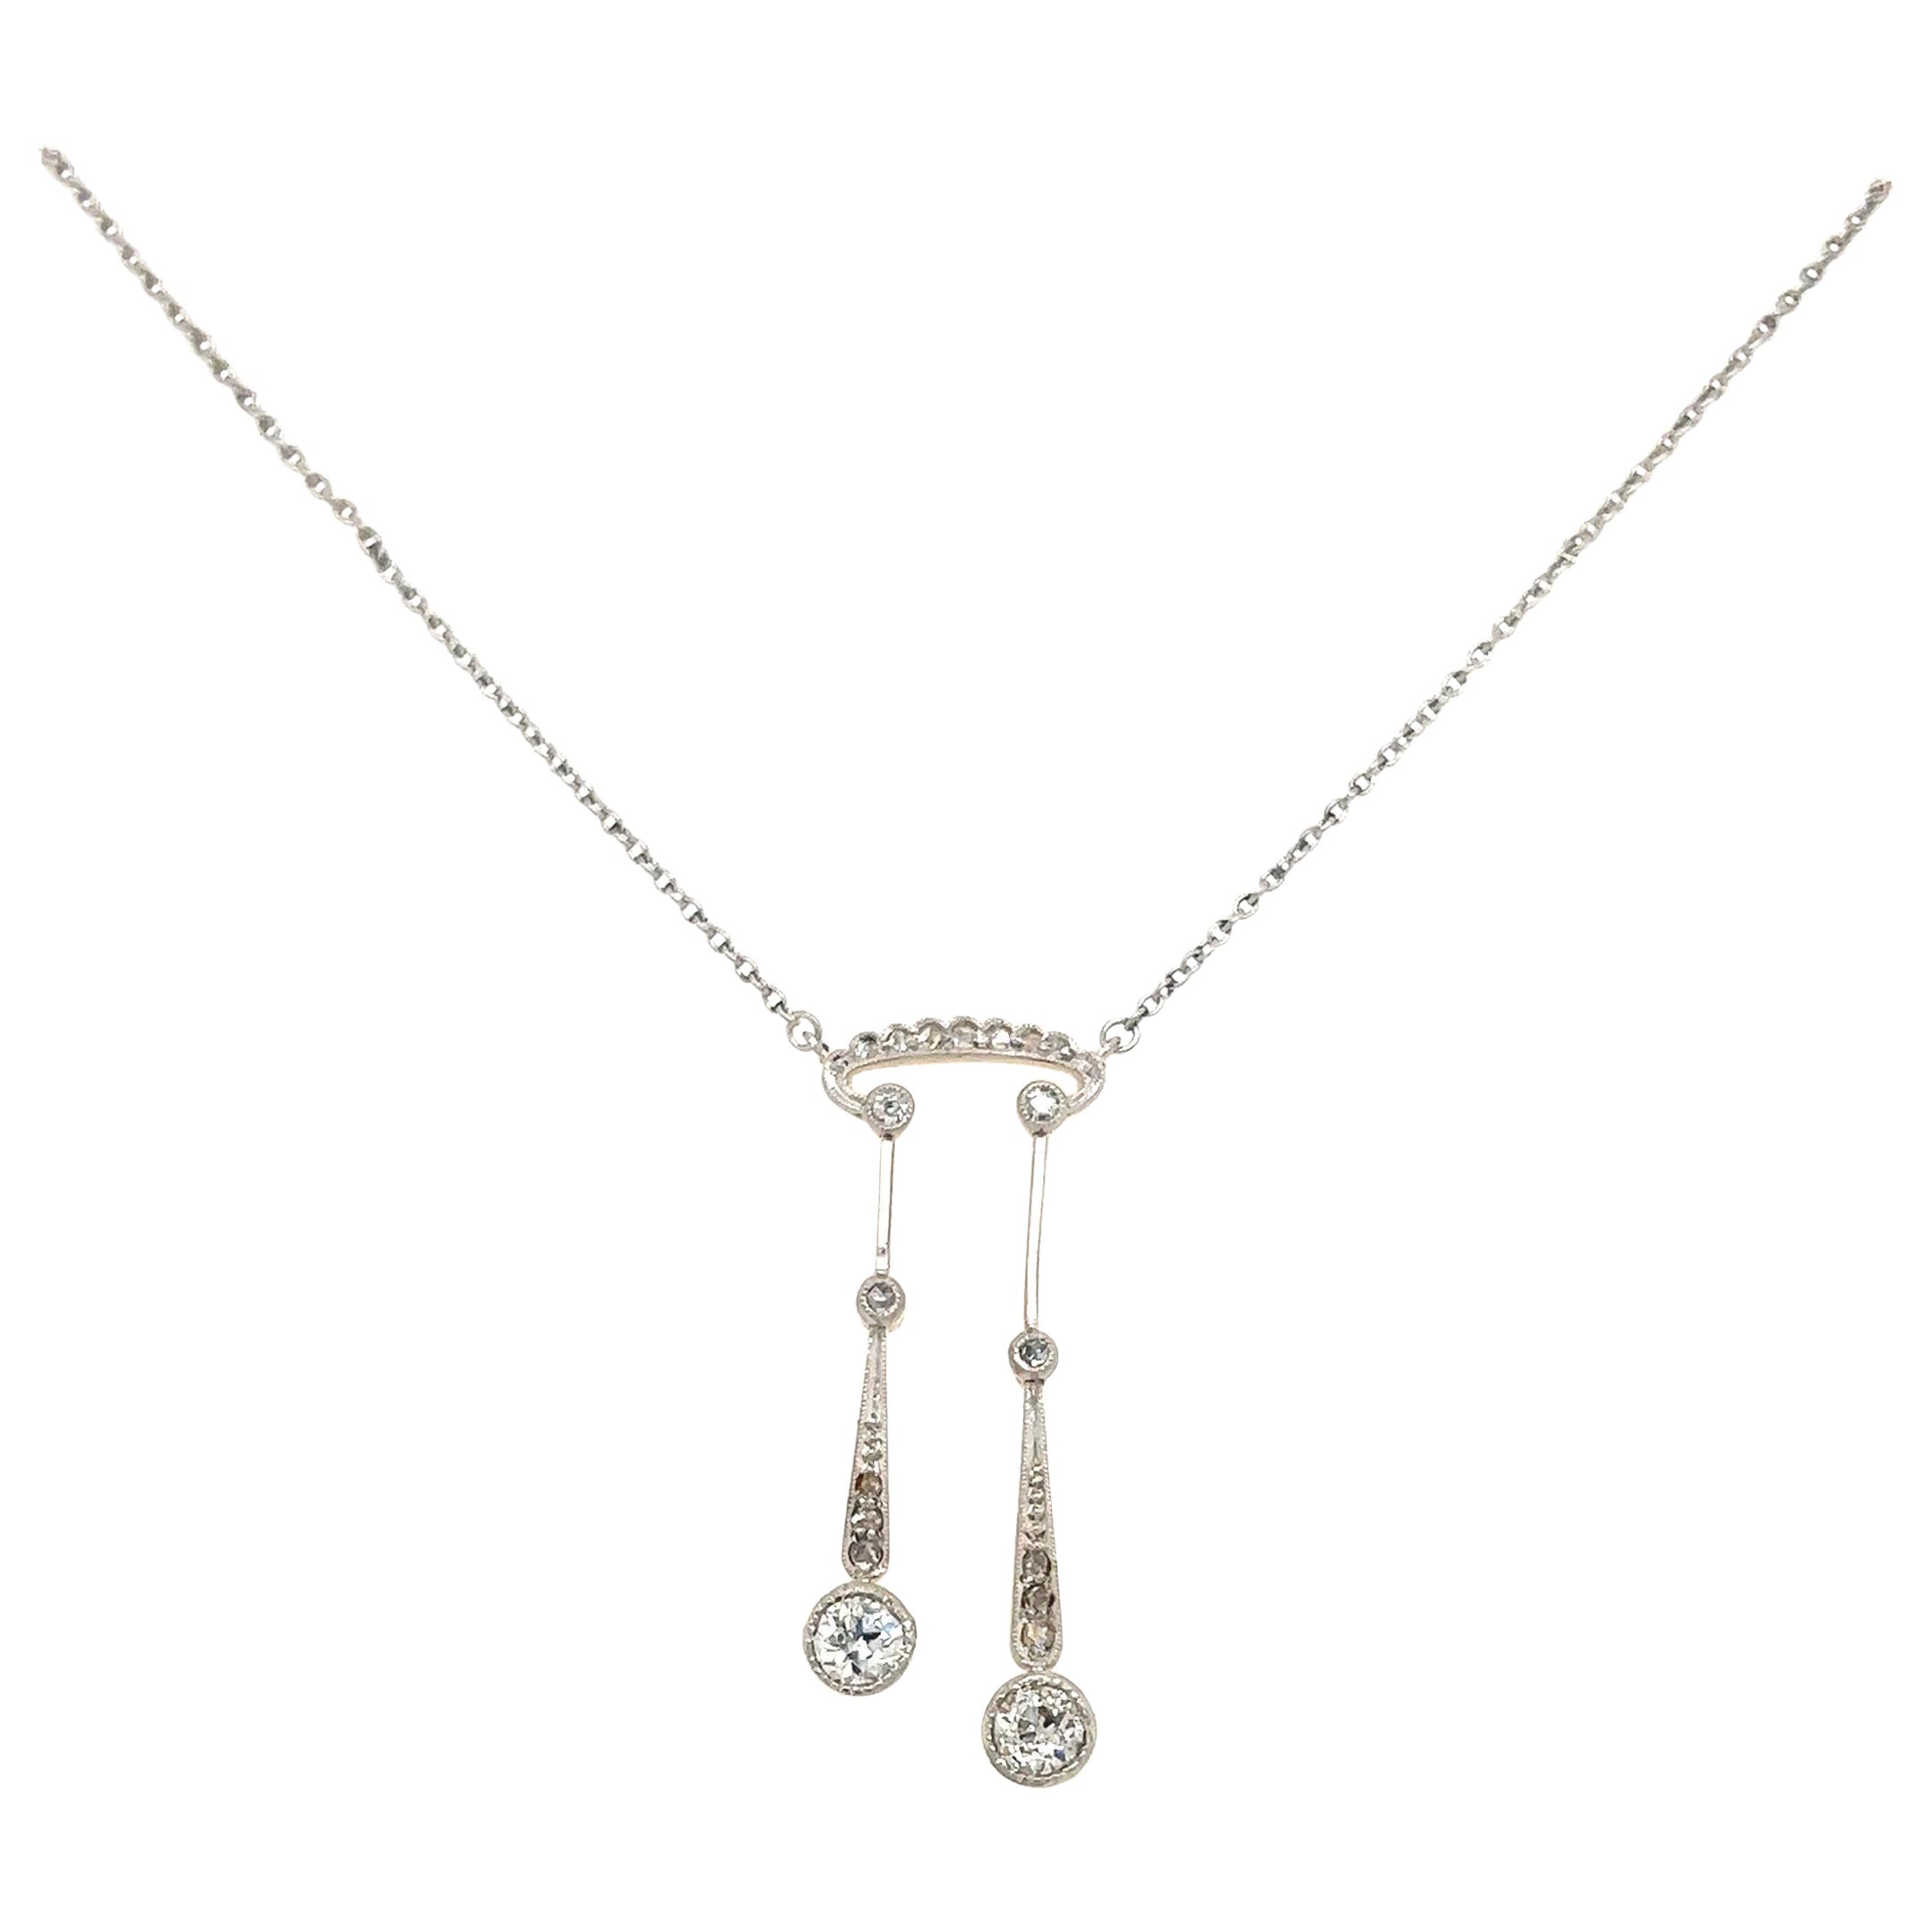 Edwardian Dangling Diamond Necklace 18k White Gold